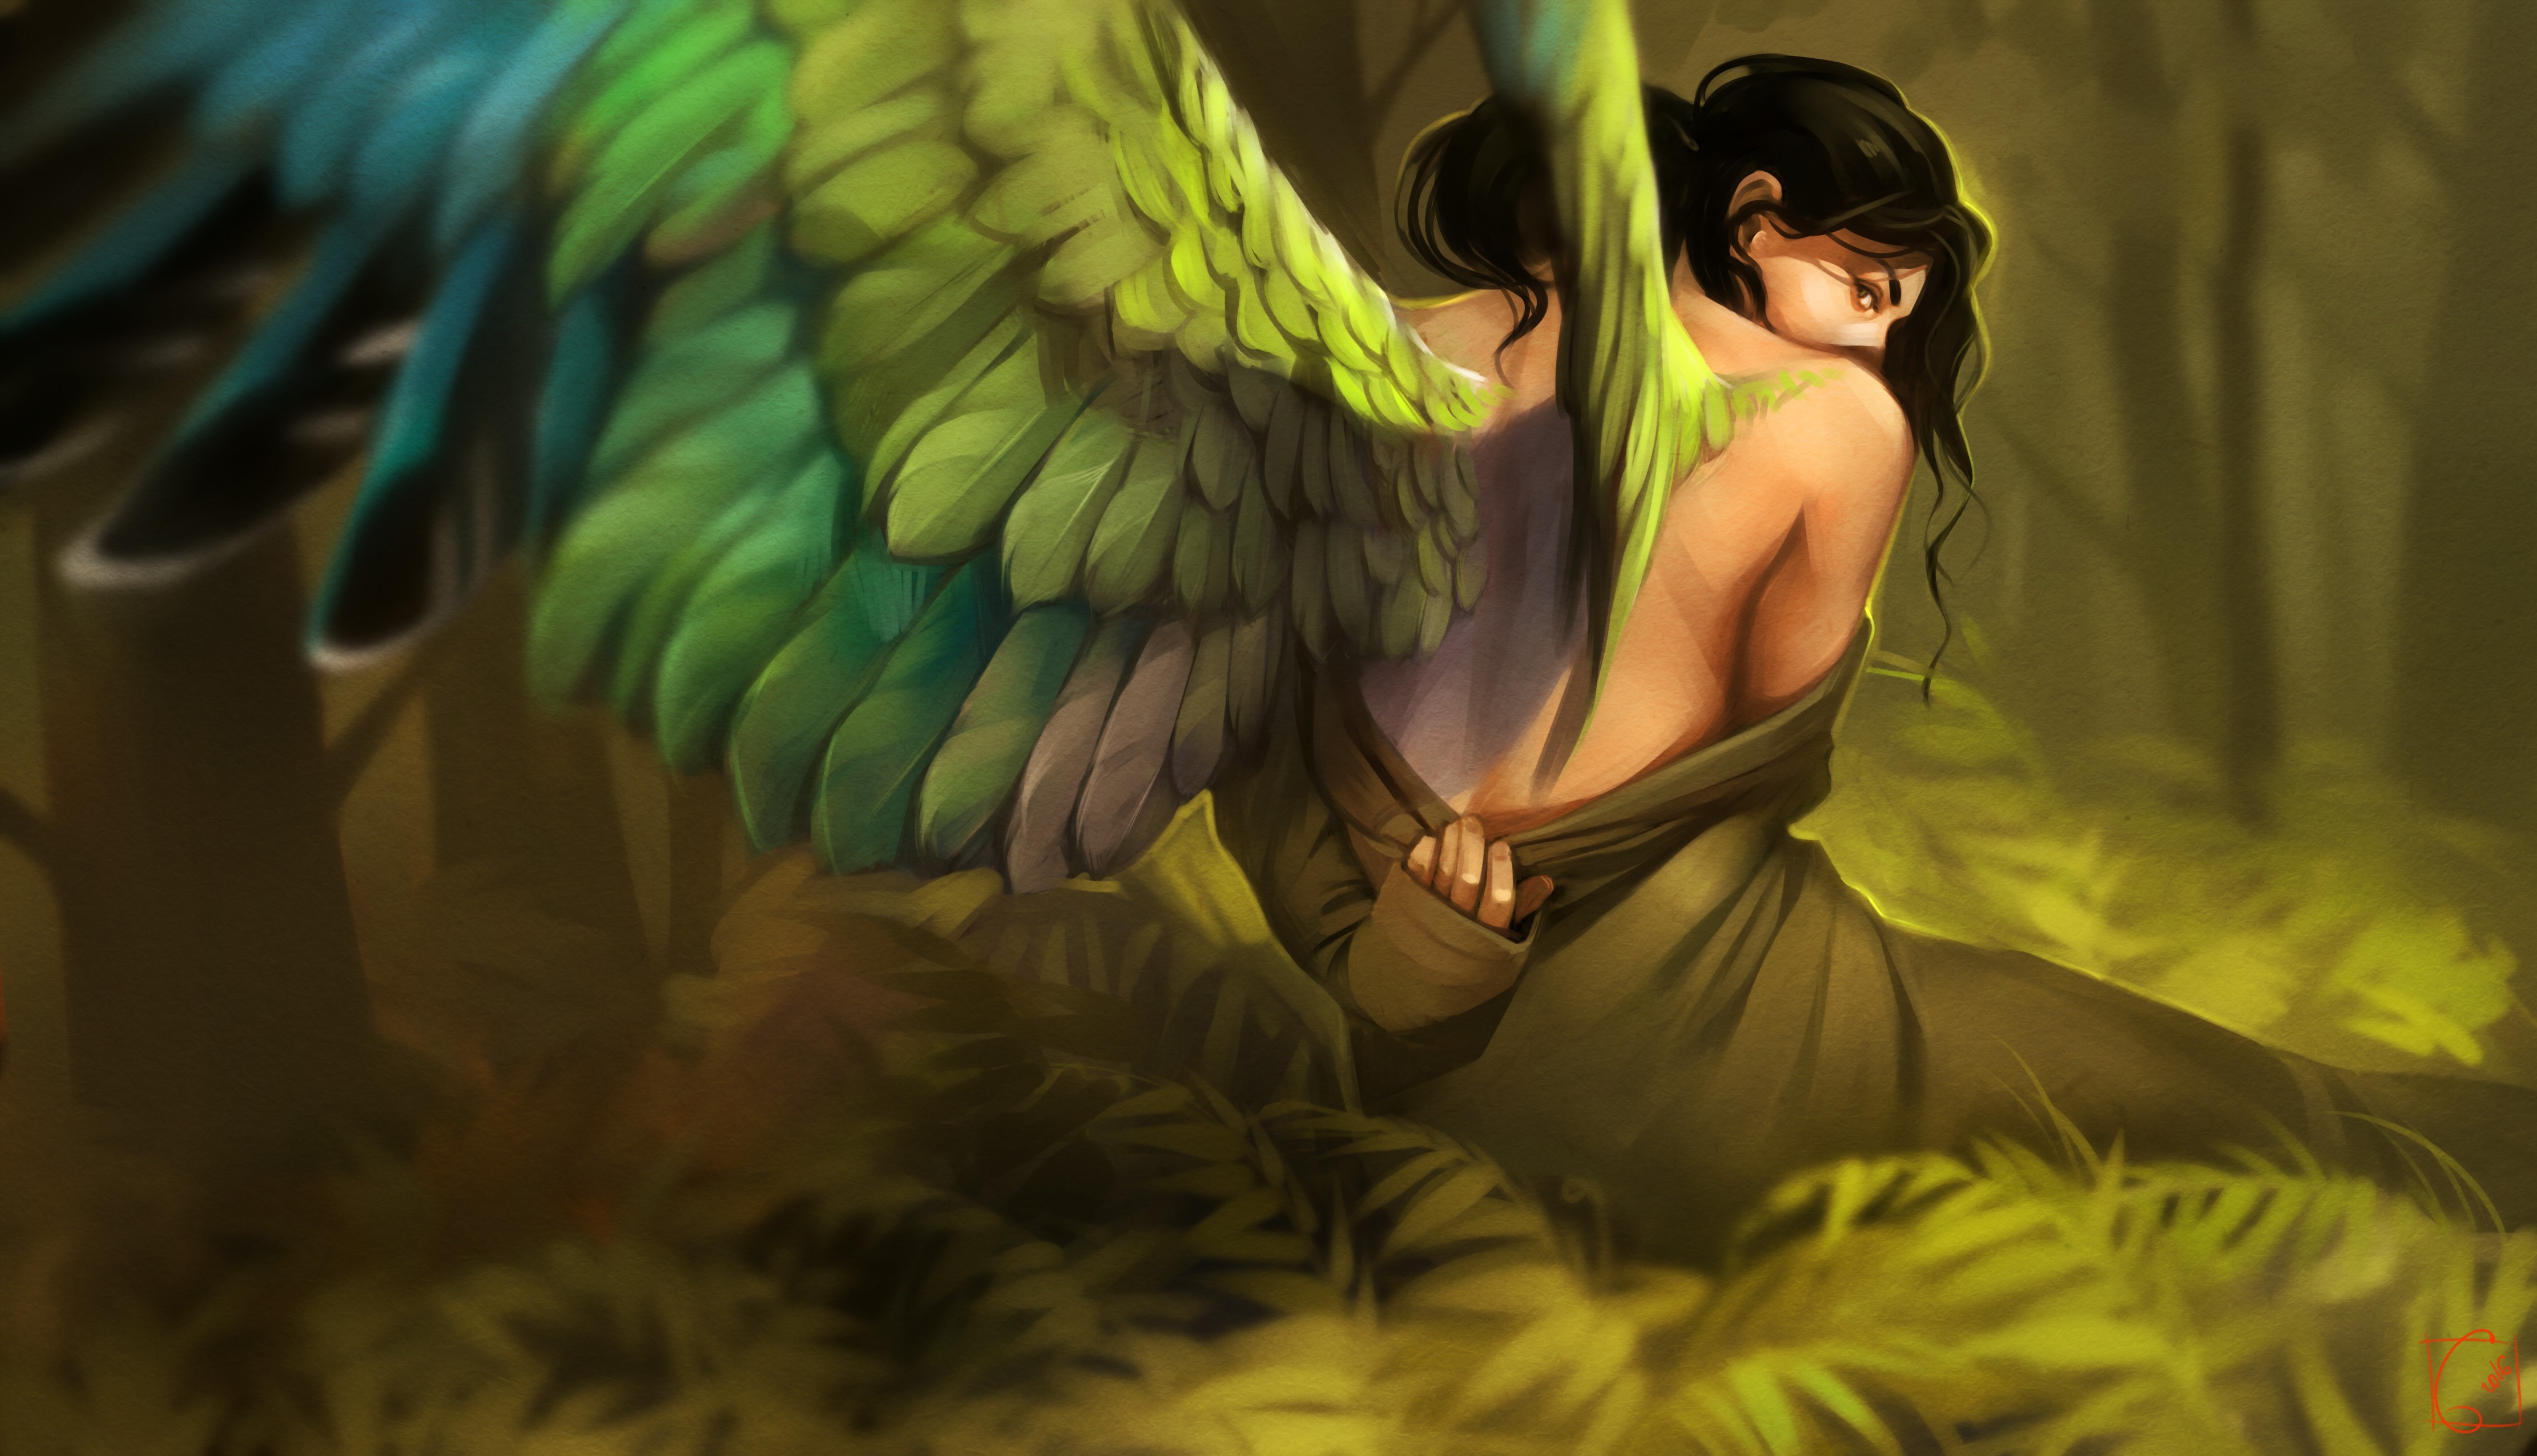 General 4444x2551 wings women green fantasy art bareback Alexandra GaudiBuendia Khitrova